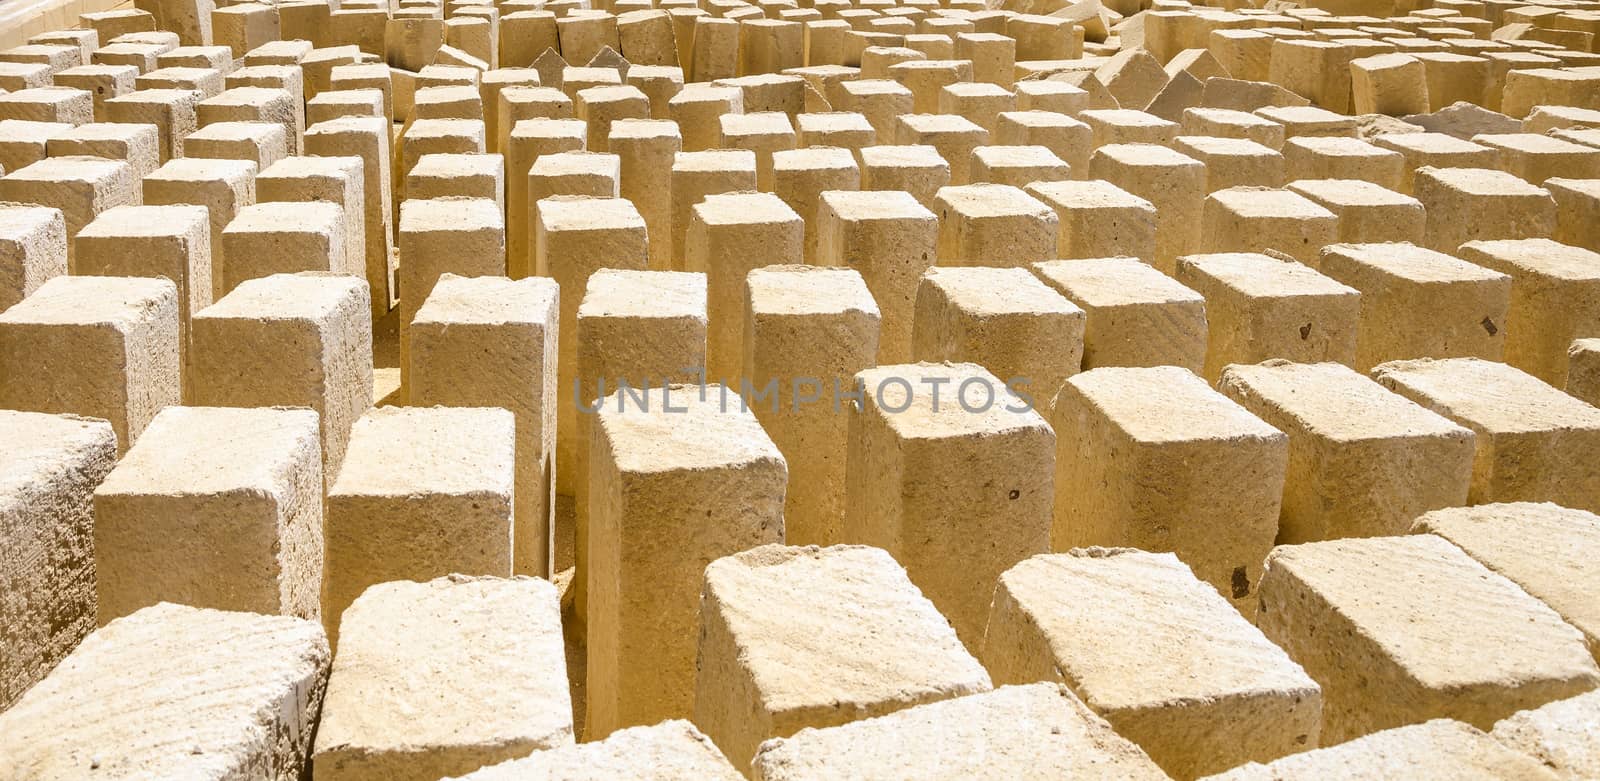 A moltidute of tufa blocks in a stone quarry